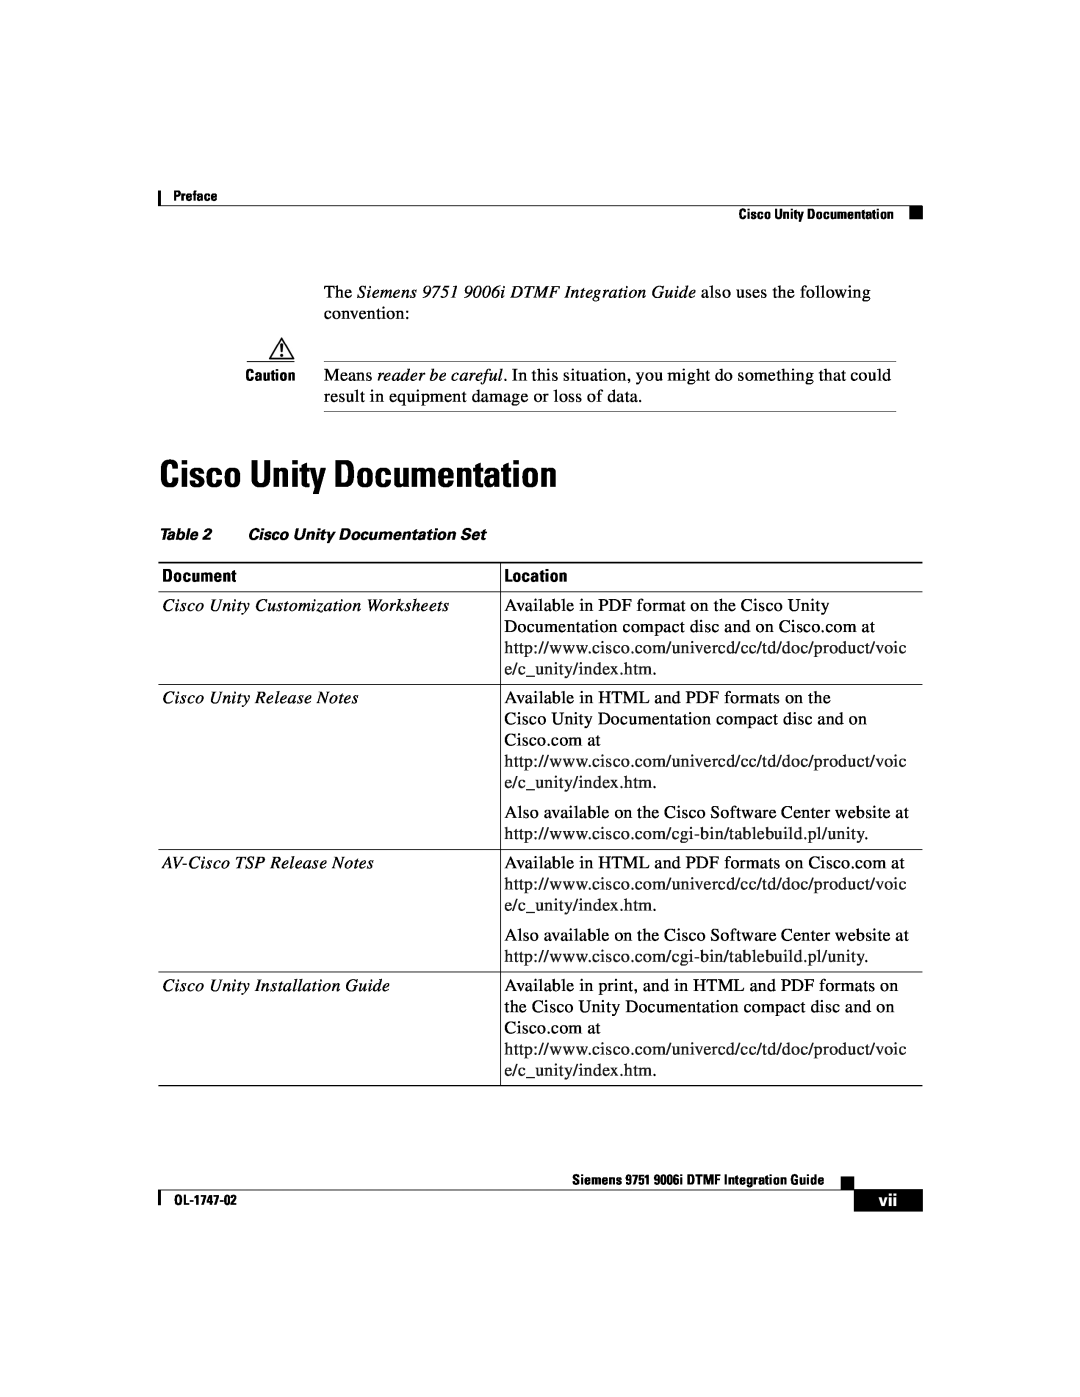 Able Planet OL-1747-02 manual Cisco Unity Documentation, Location 